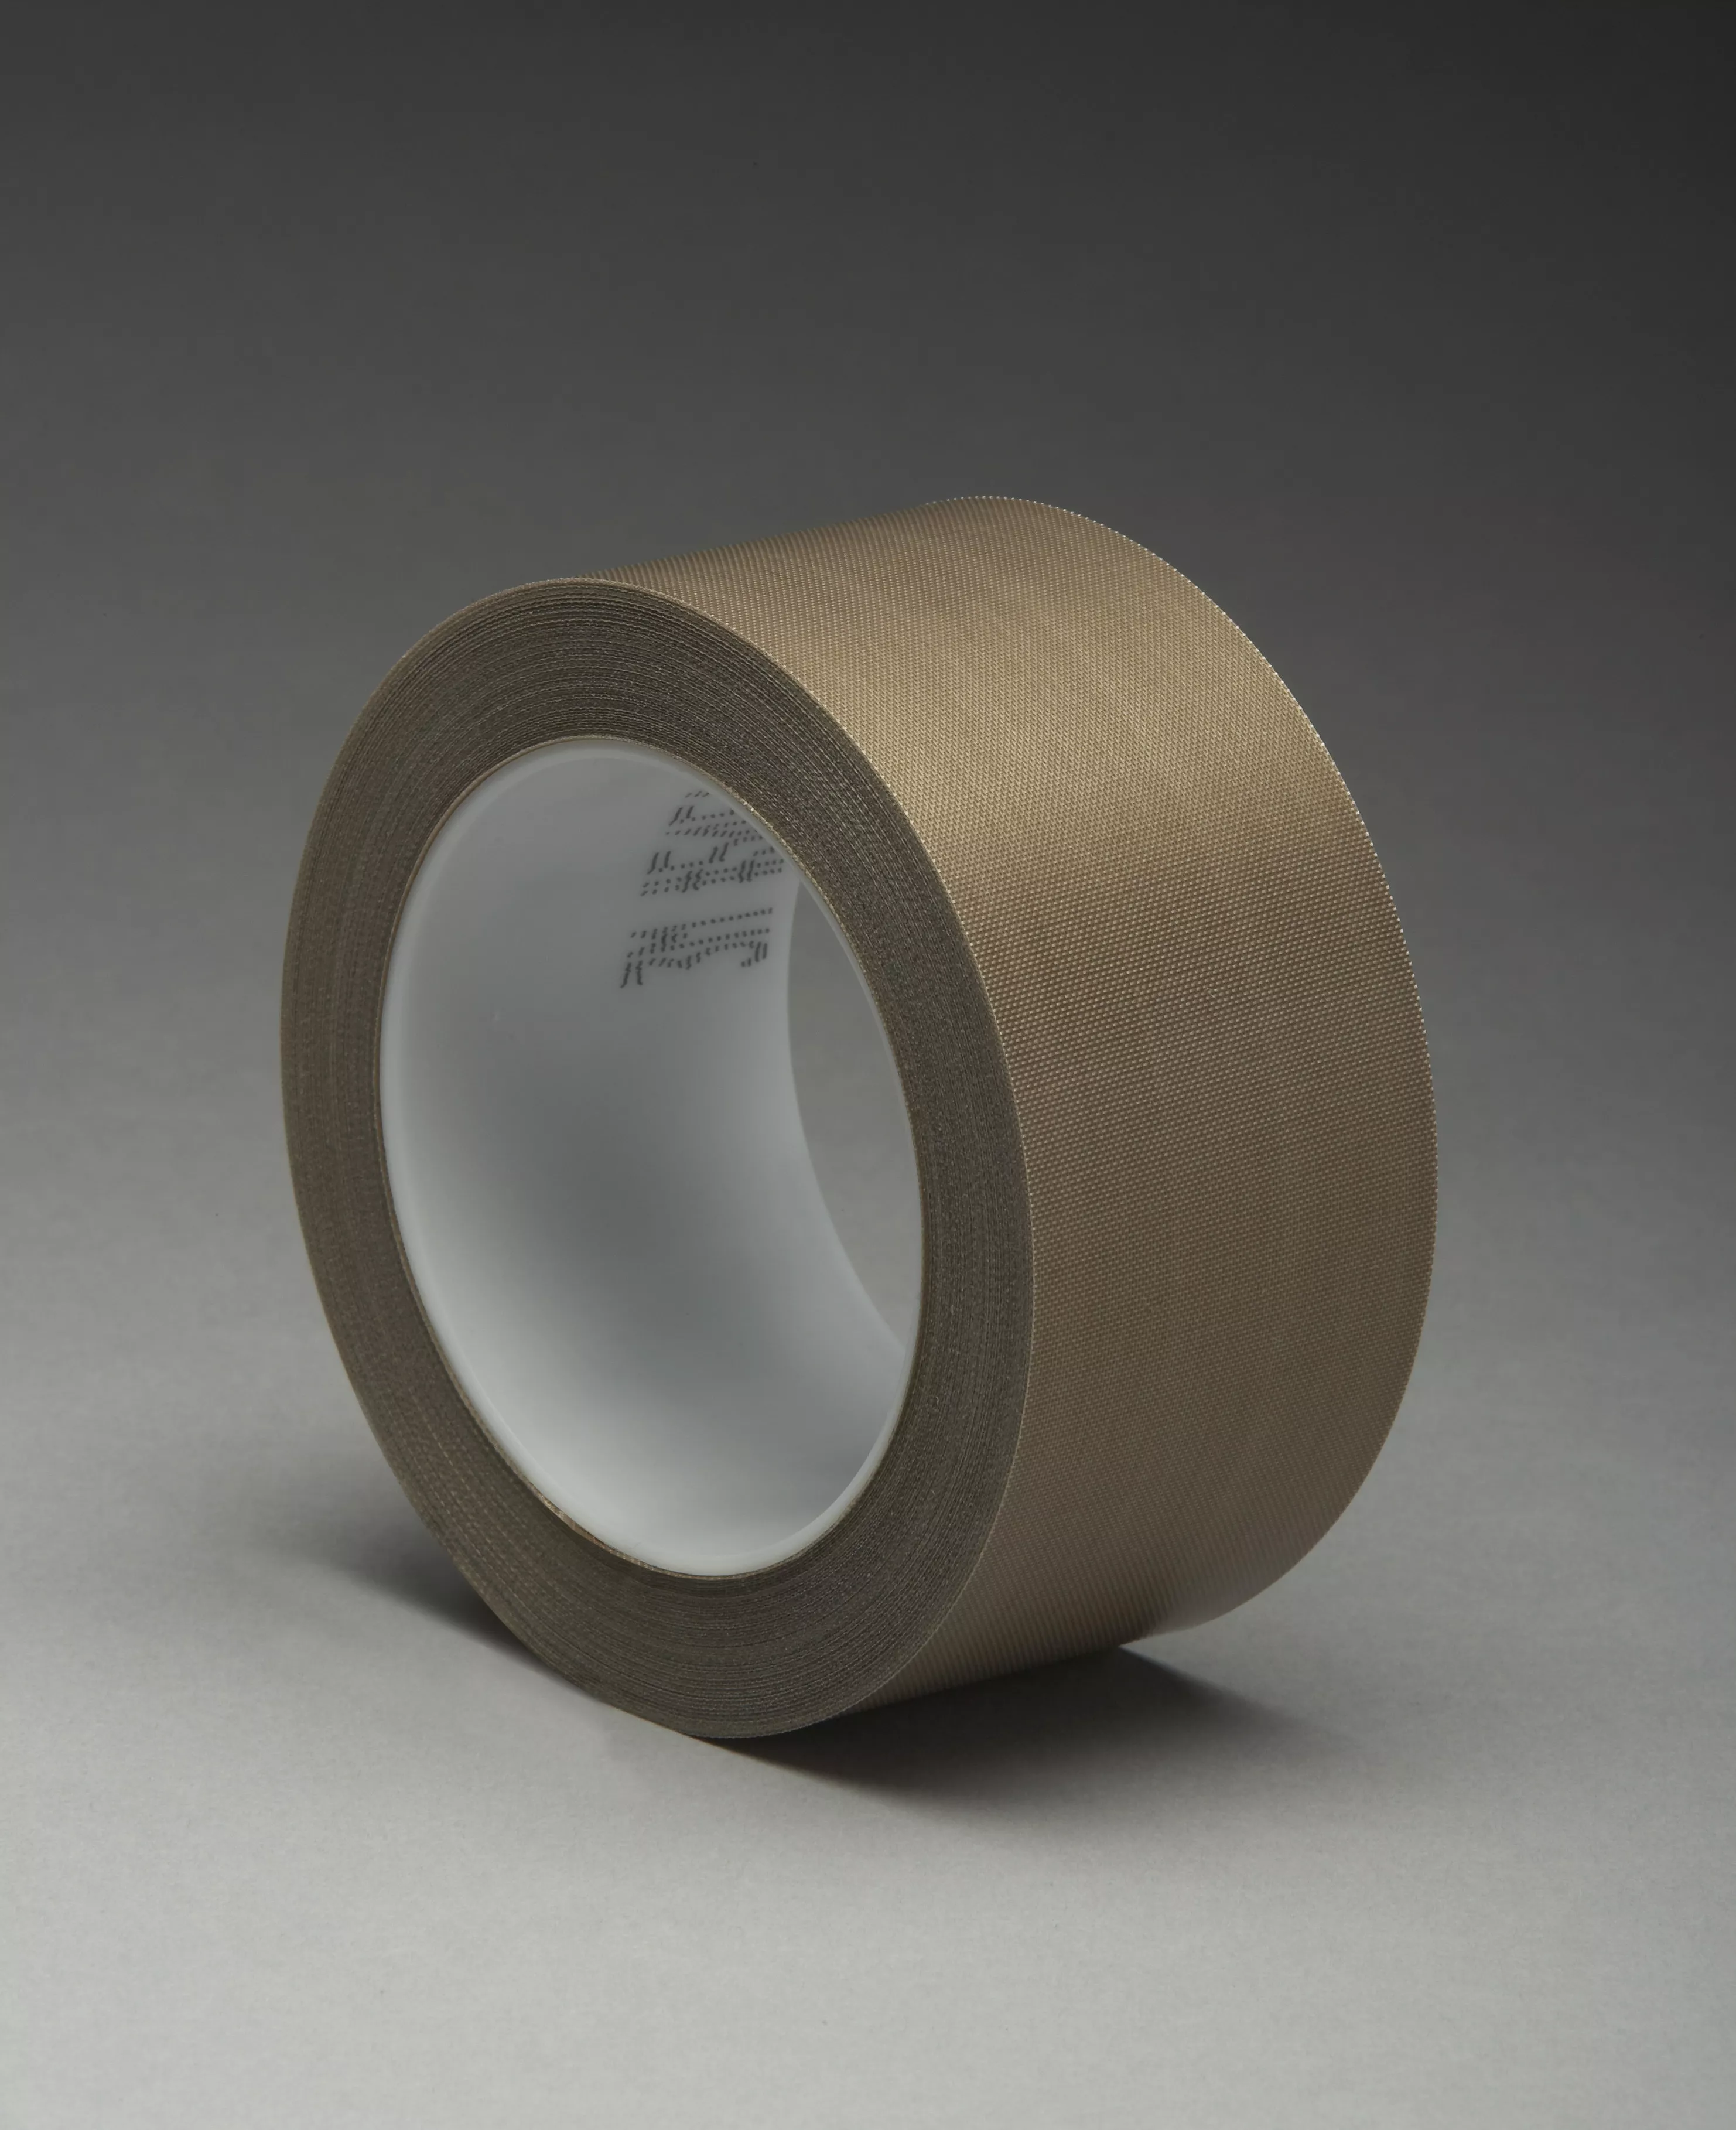 3M™ PTFE Glass Cloth Tape 5451, Brown, 48 in x 36 yd, 5.6 mil, 1 roll
per case